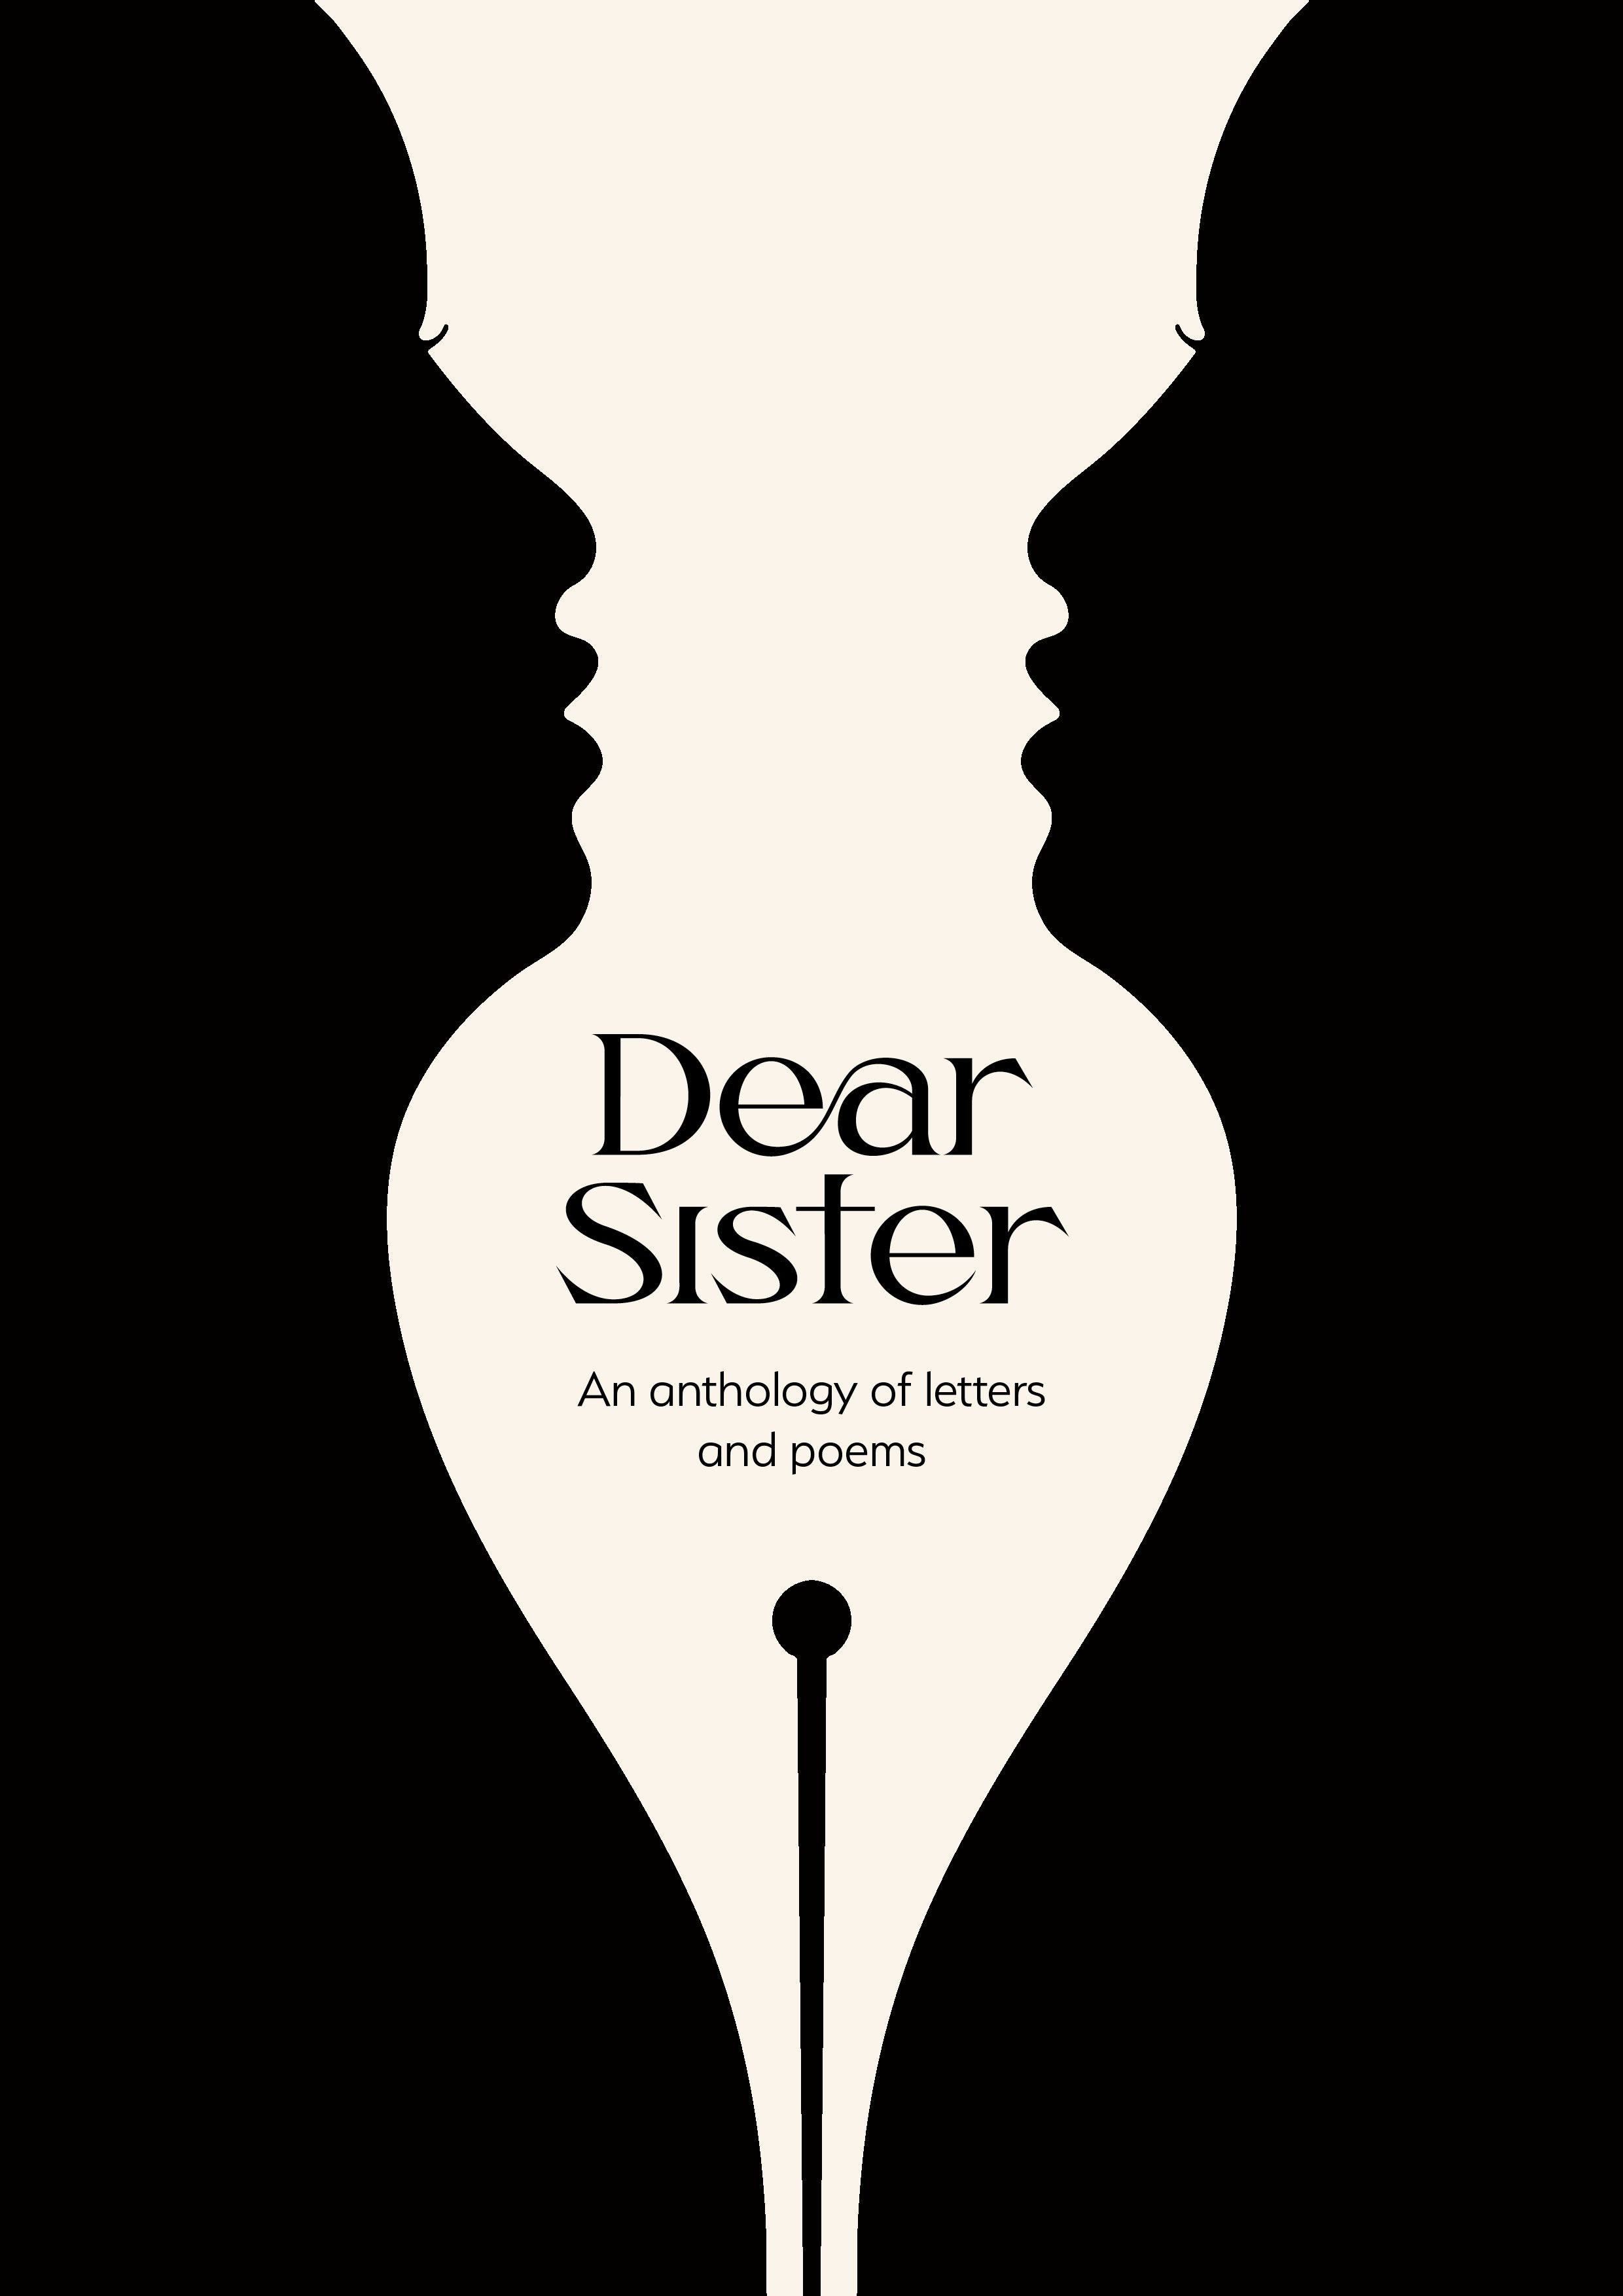 Dear Sister book cover design.jpg